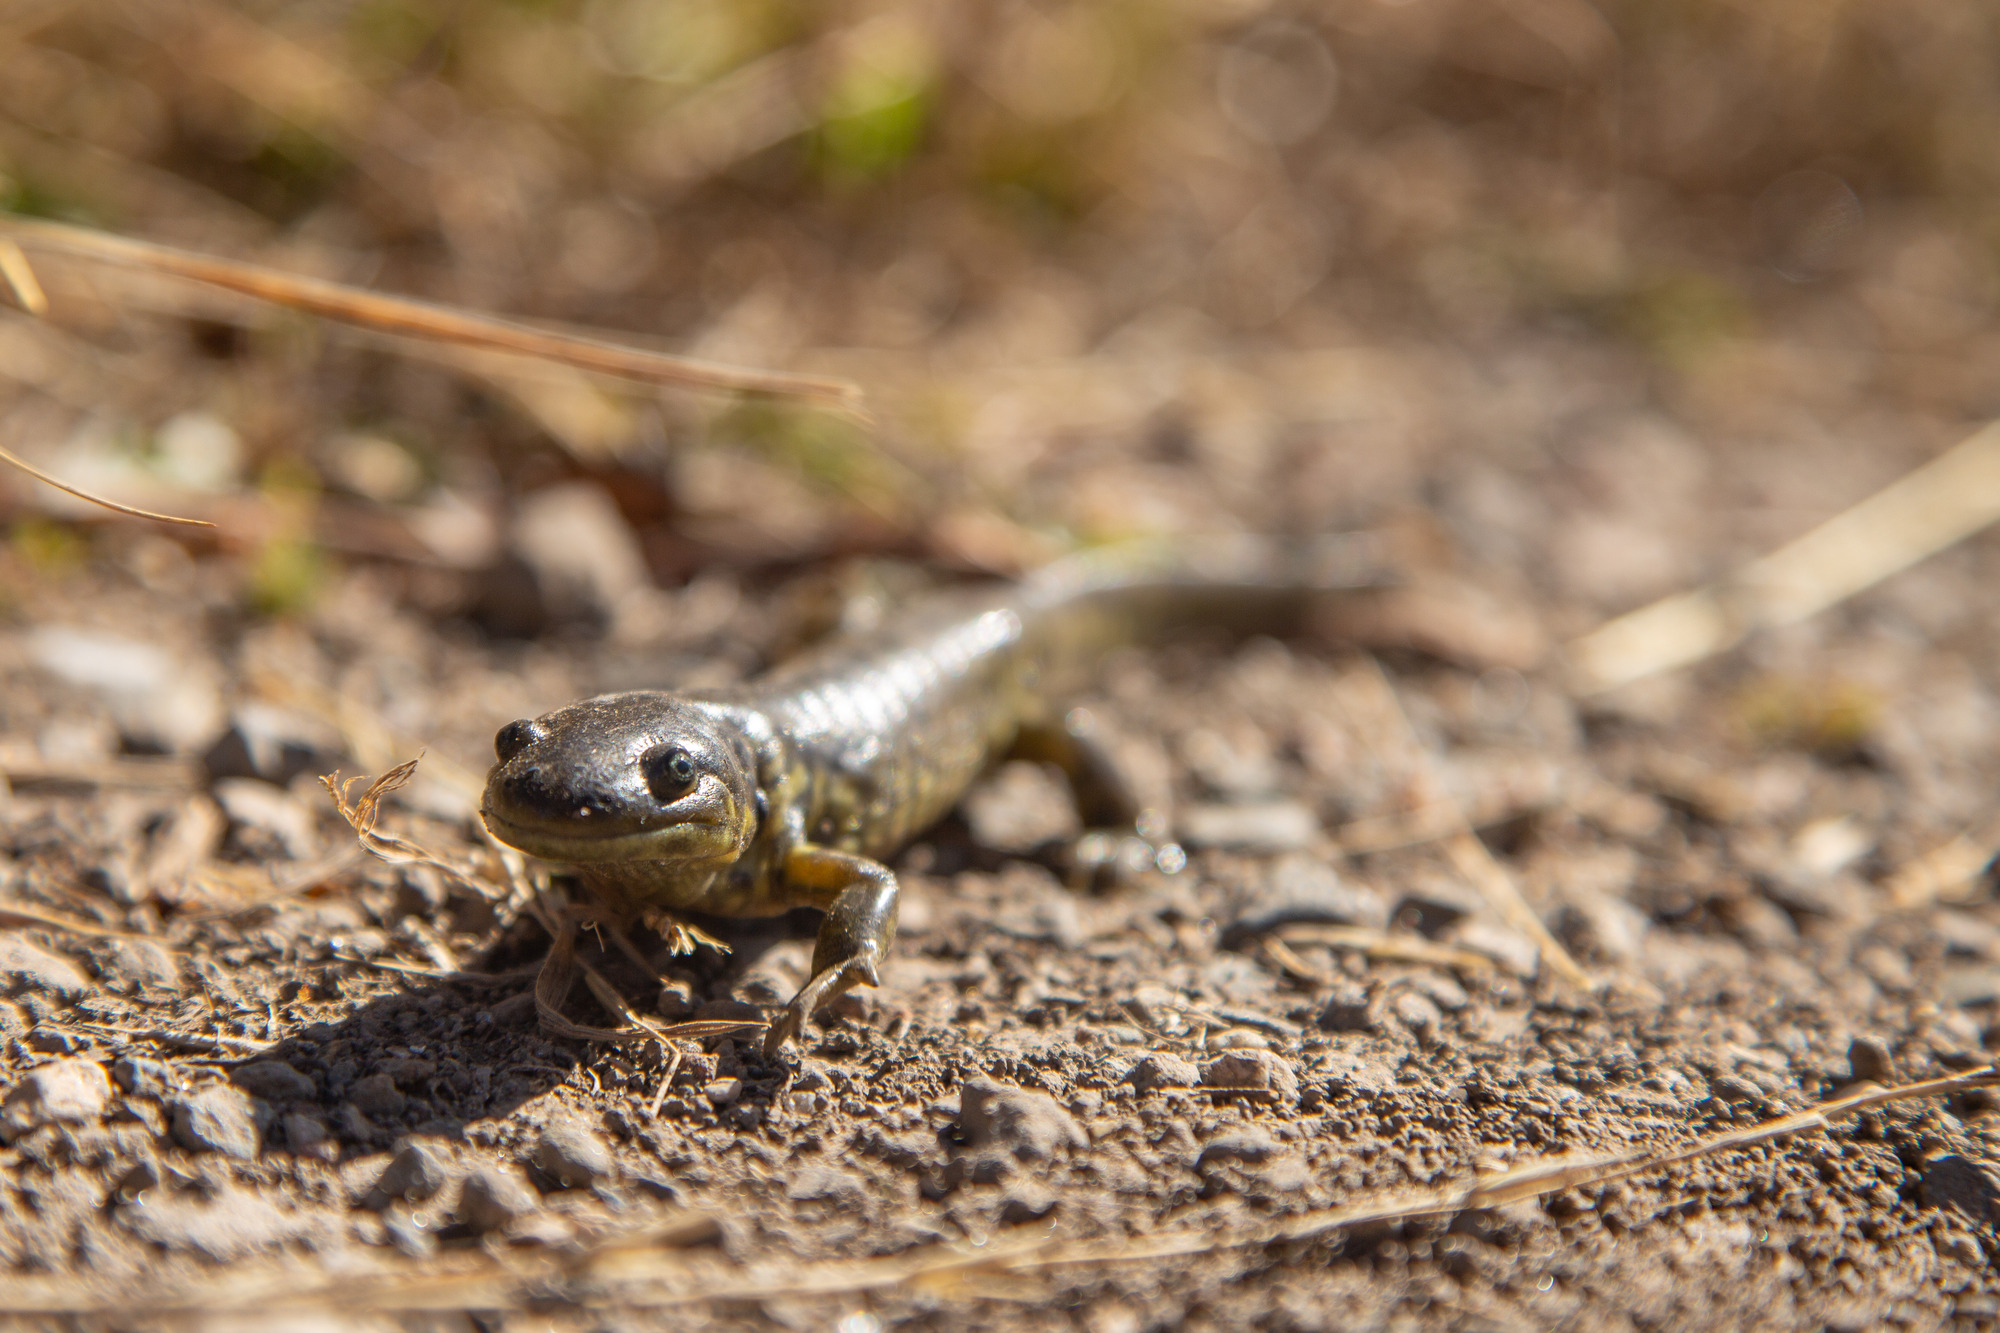 Salamander moves across dirt